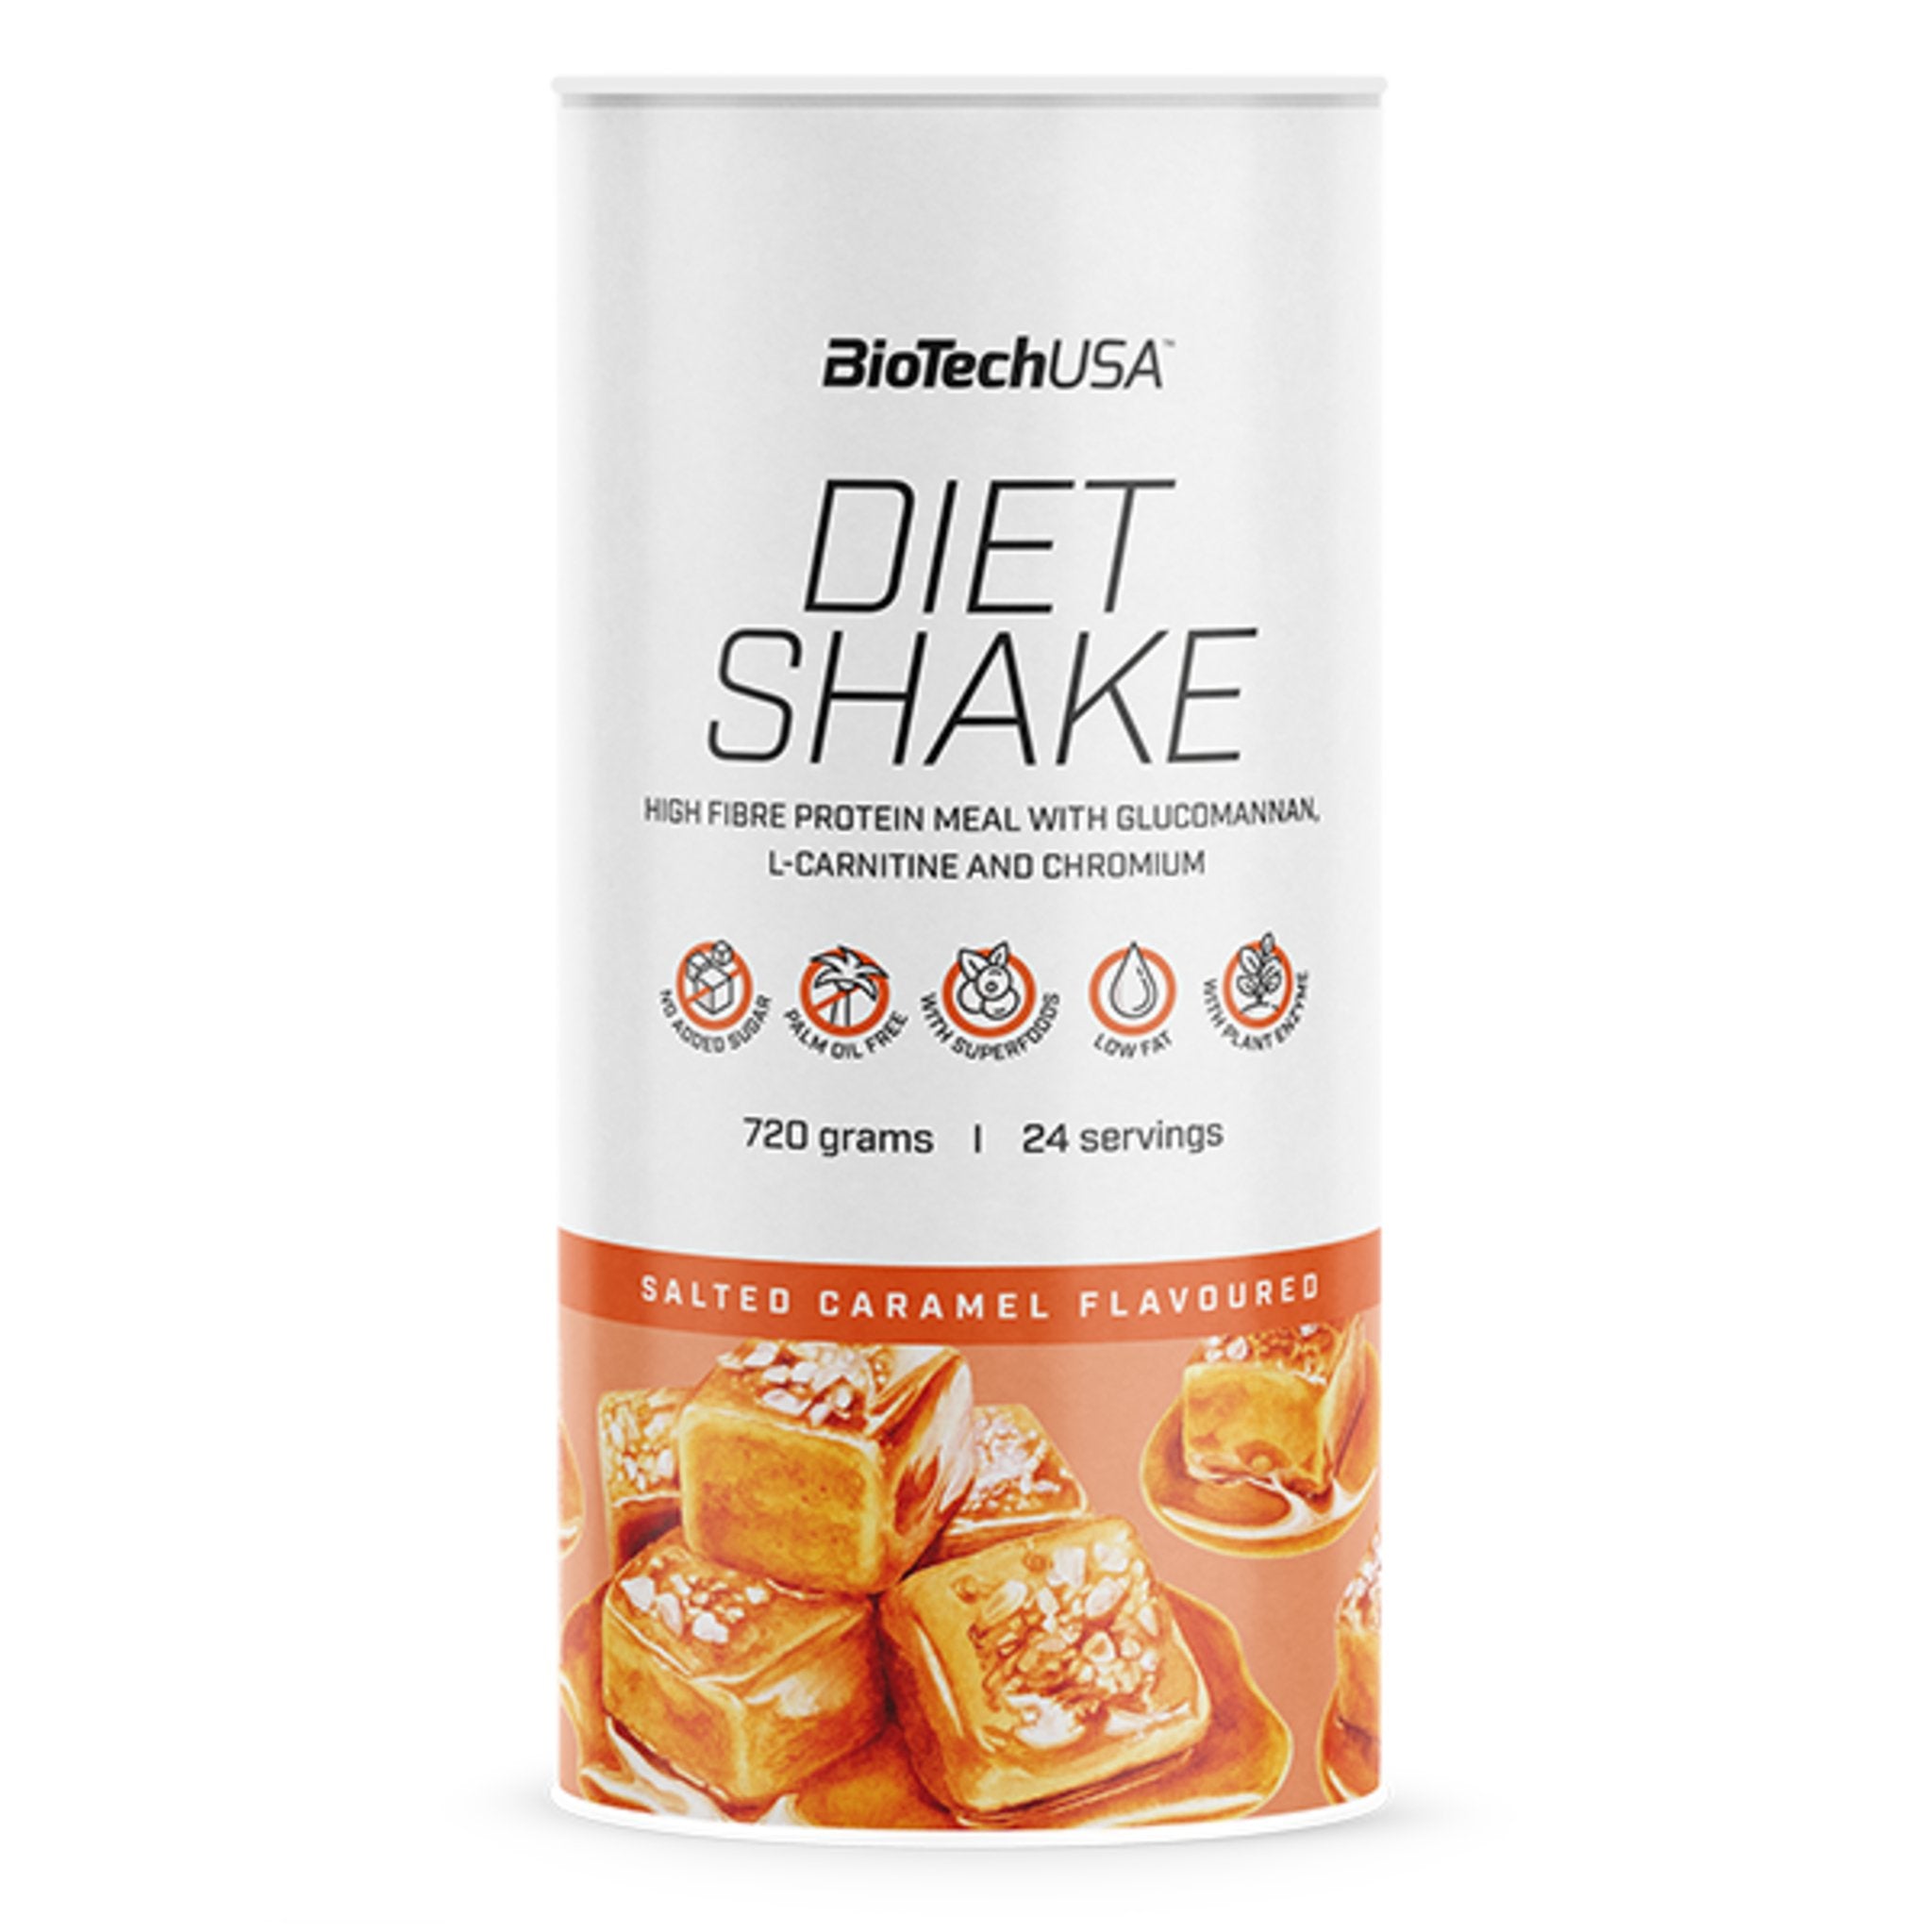 shake uri proteice pentru masa musculara Pudre Proteice, BioTechUSA, Diet Shake, 720g